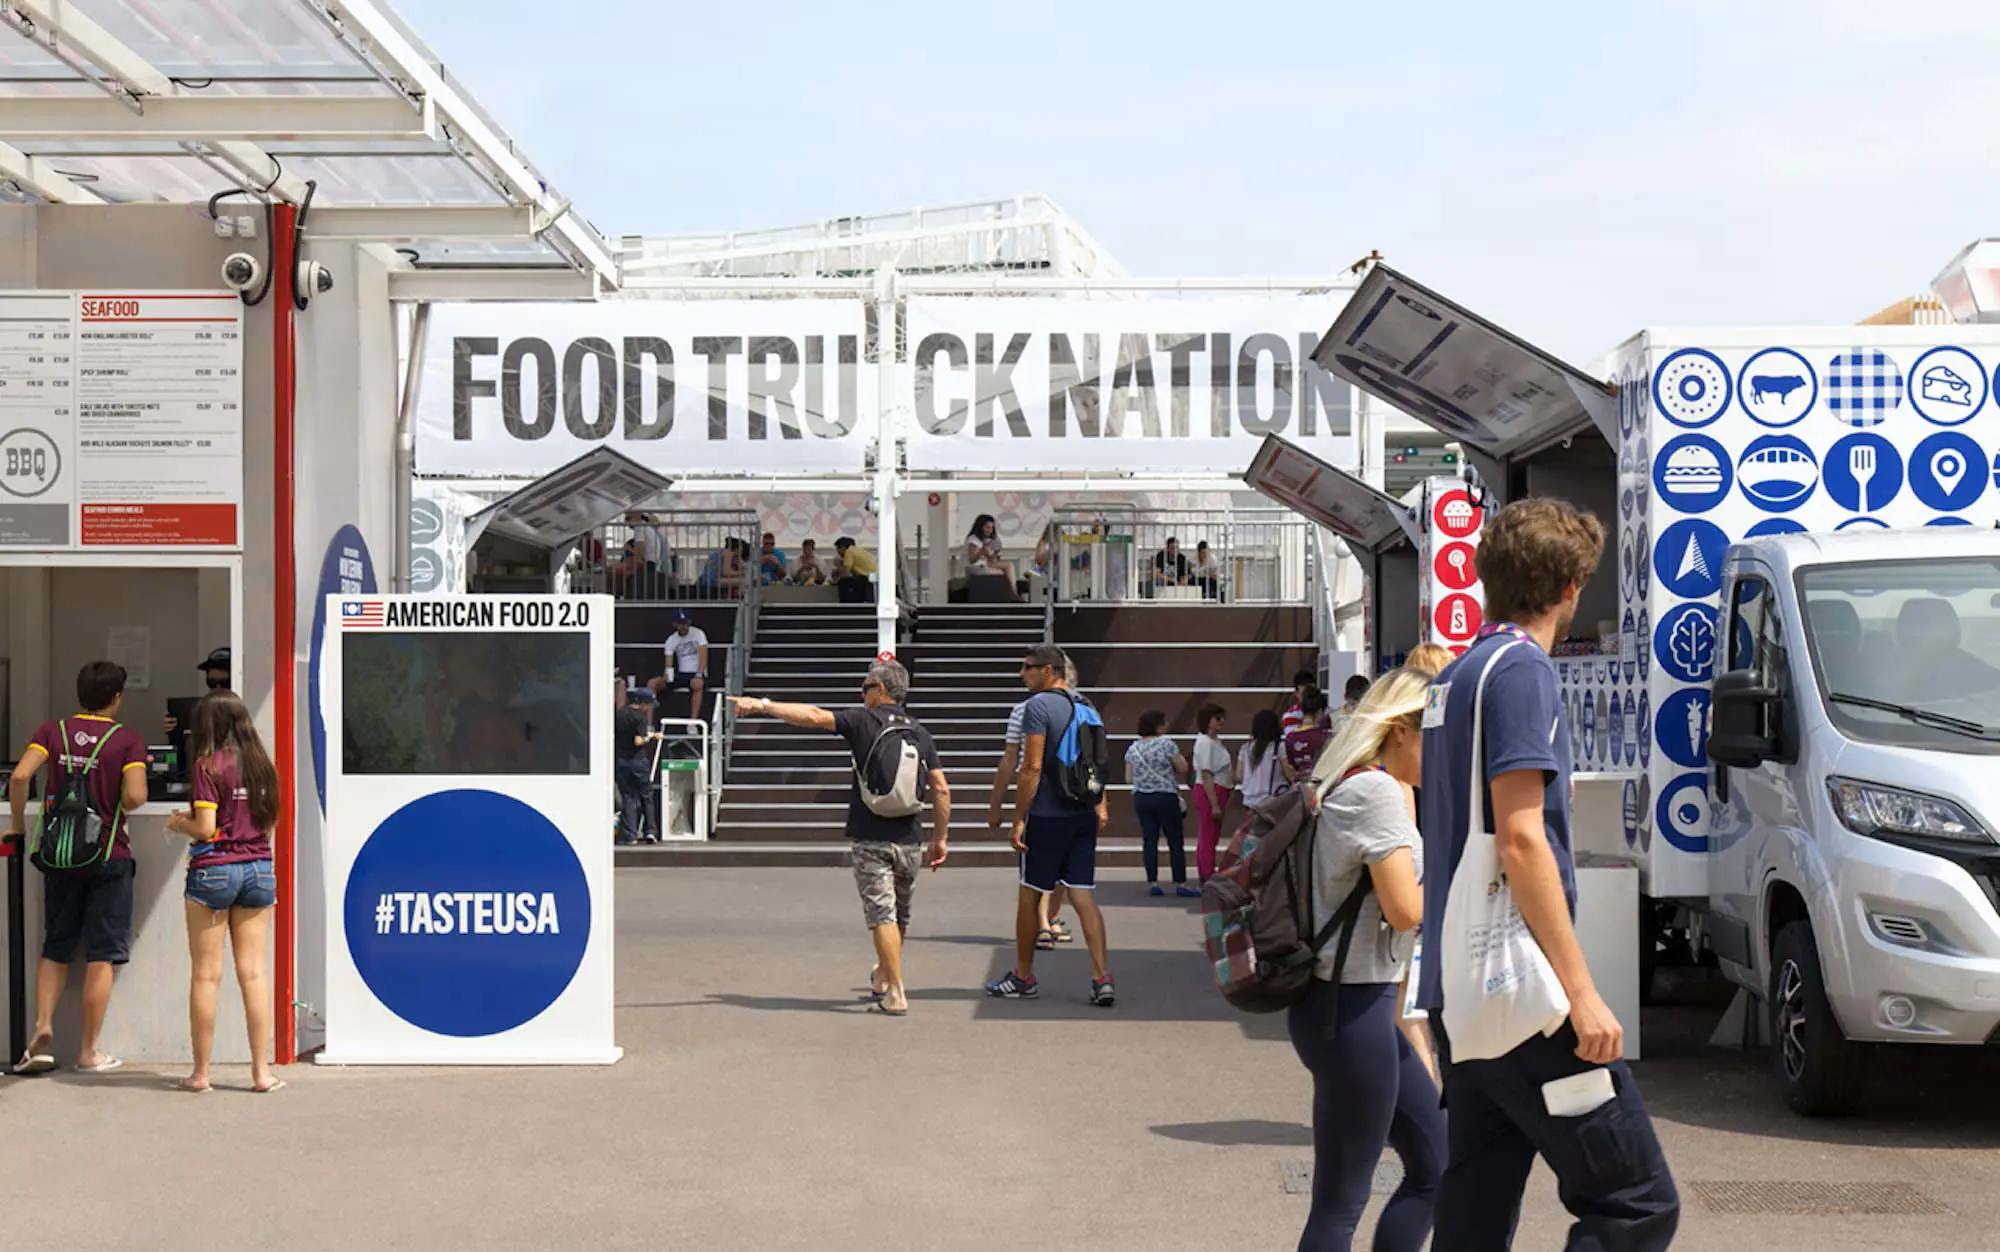 Food Truck Nation Pavilion, EXPO 2015, Milan